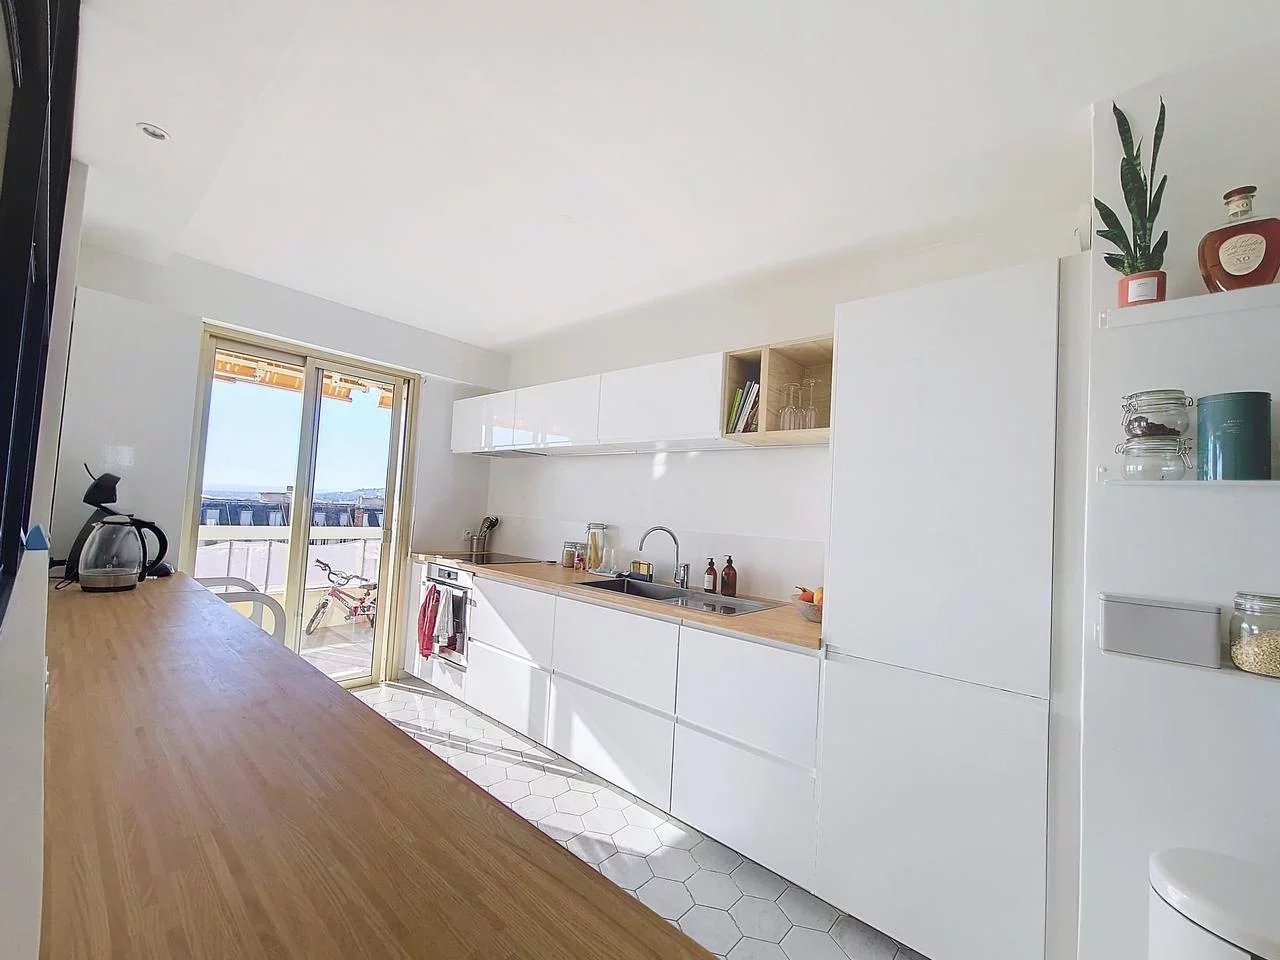 Appartement  4 Locali 101.09m2  In vendita   835 000 €